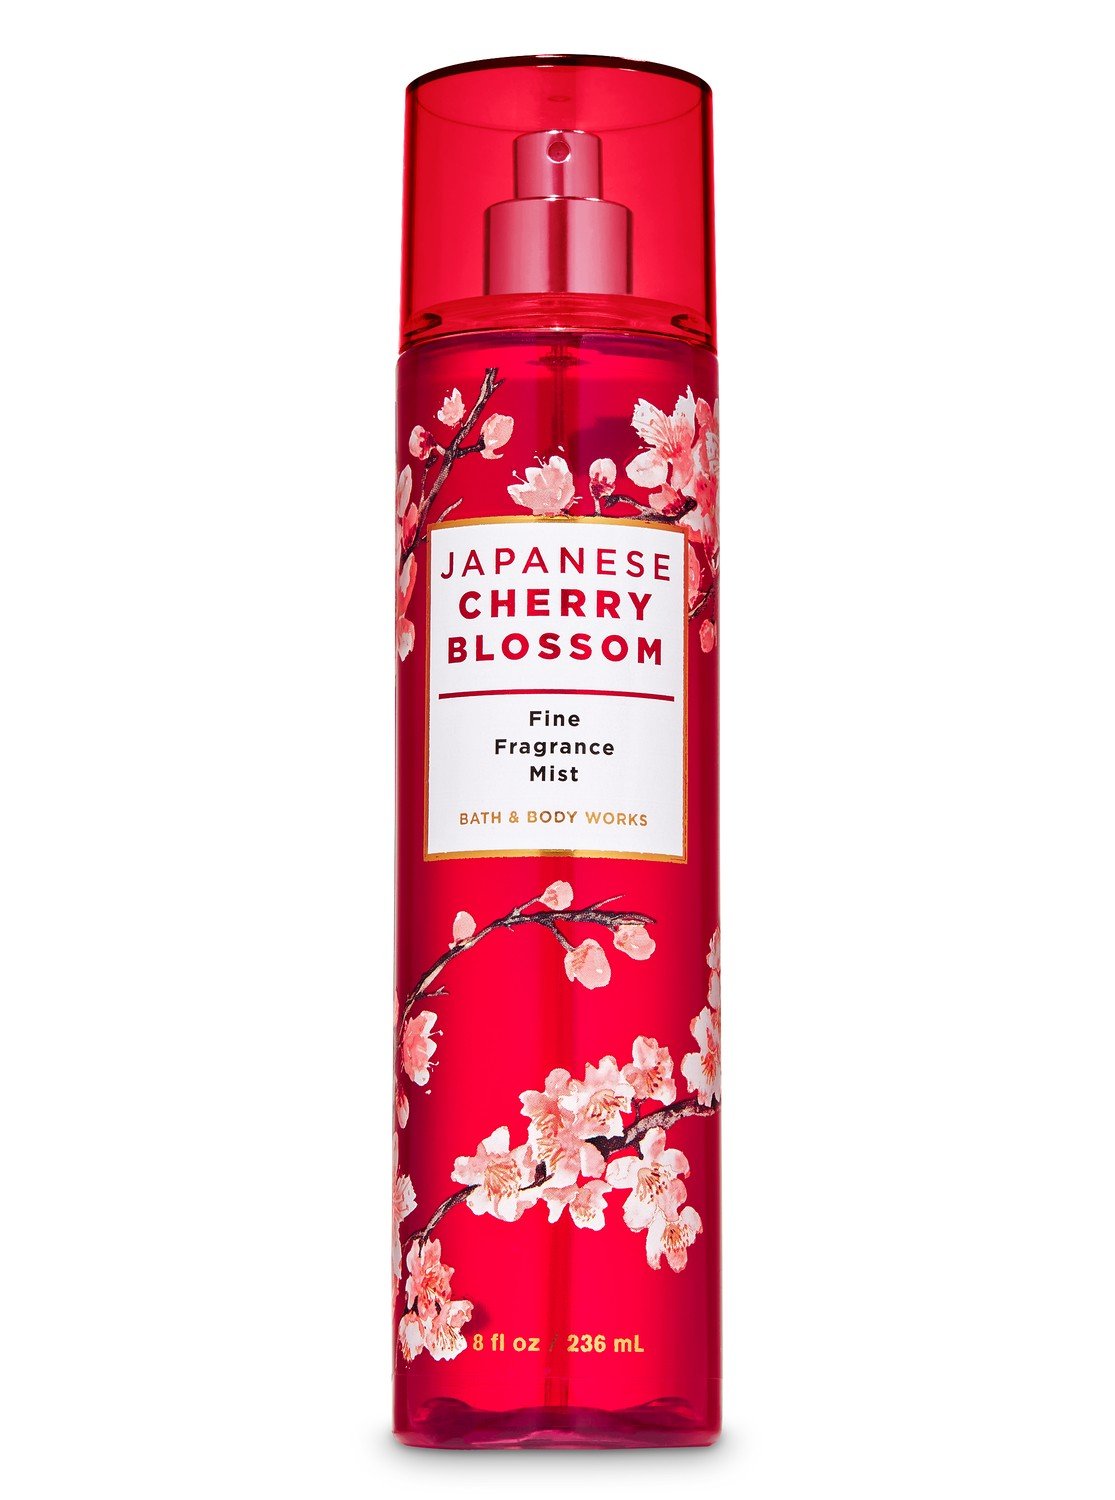 Japanese Cherry Blossom Body Spray Mist Bath Body Works Australia